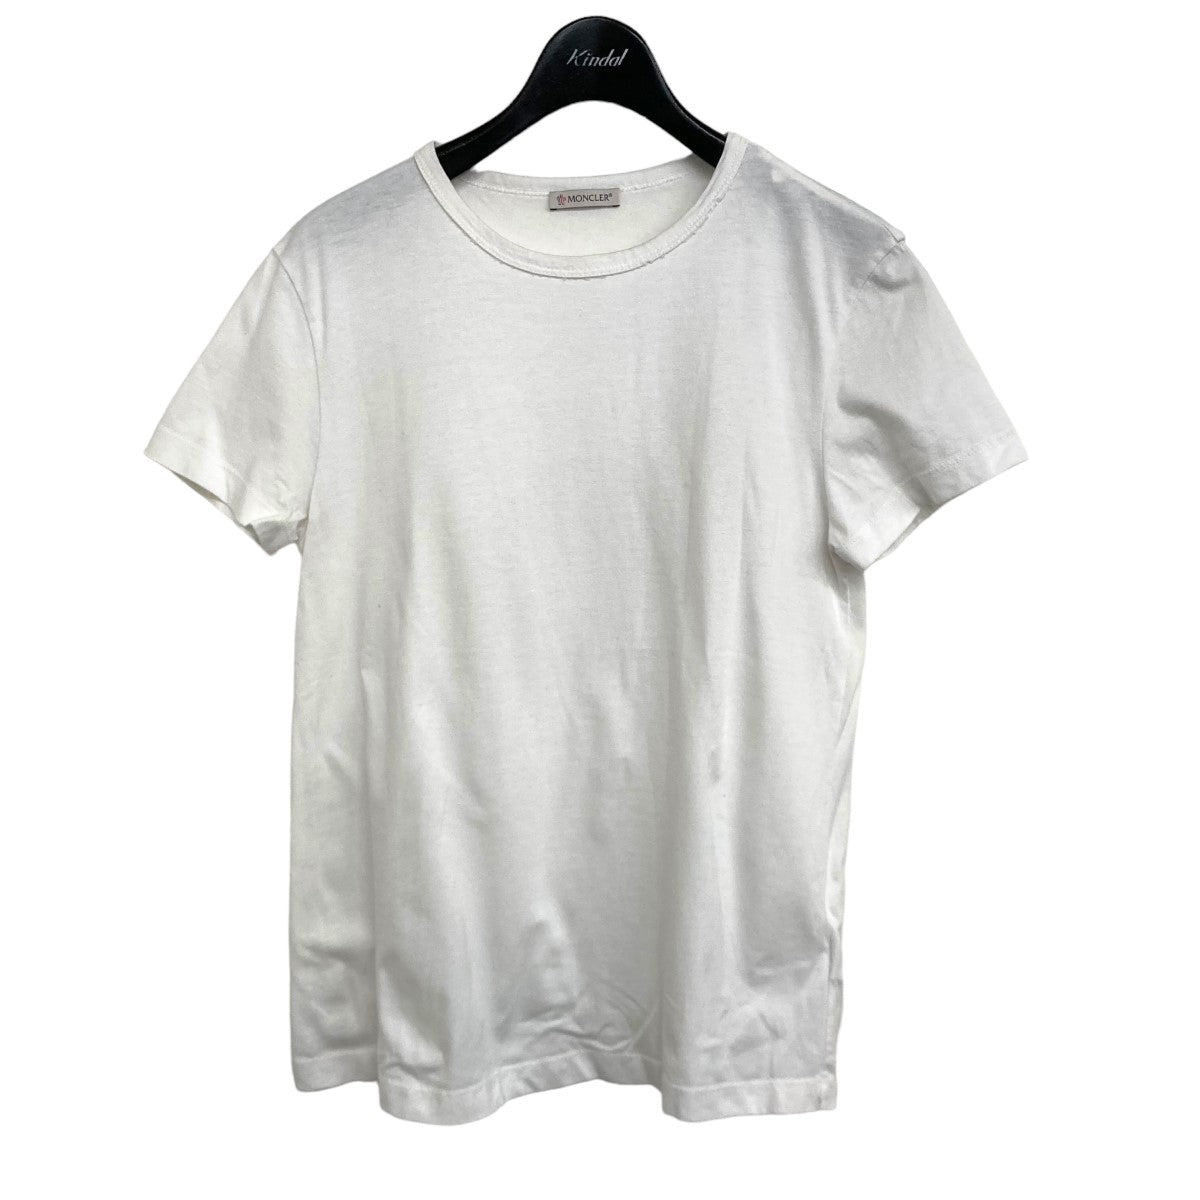 MONCLER(モンクレール) T-SHIRT GIROCOLLOクルーネックTシャツ ...